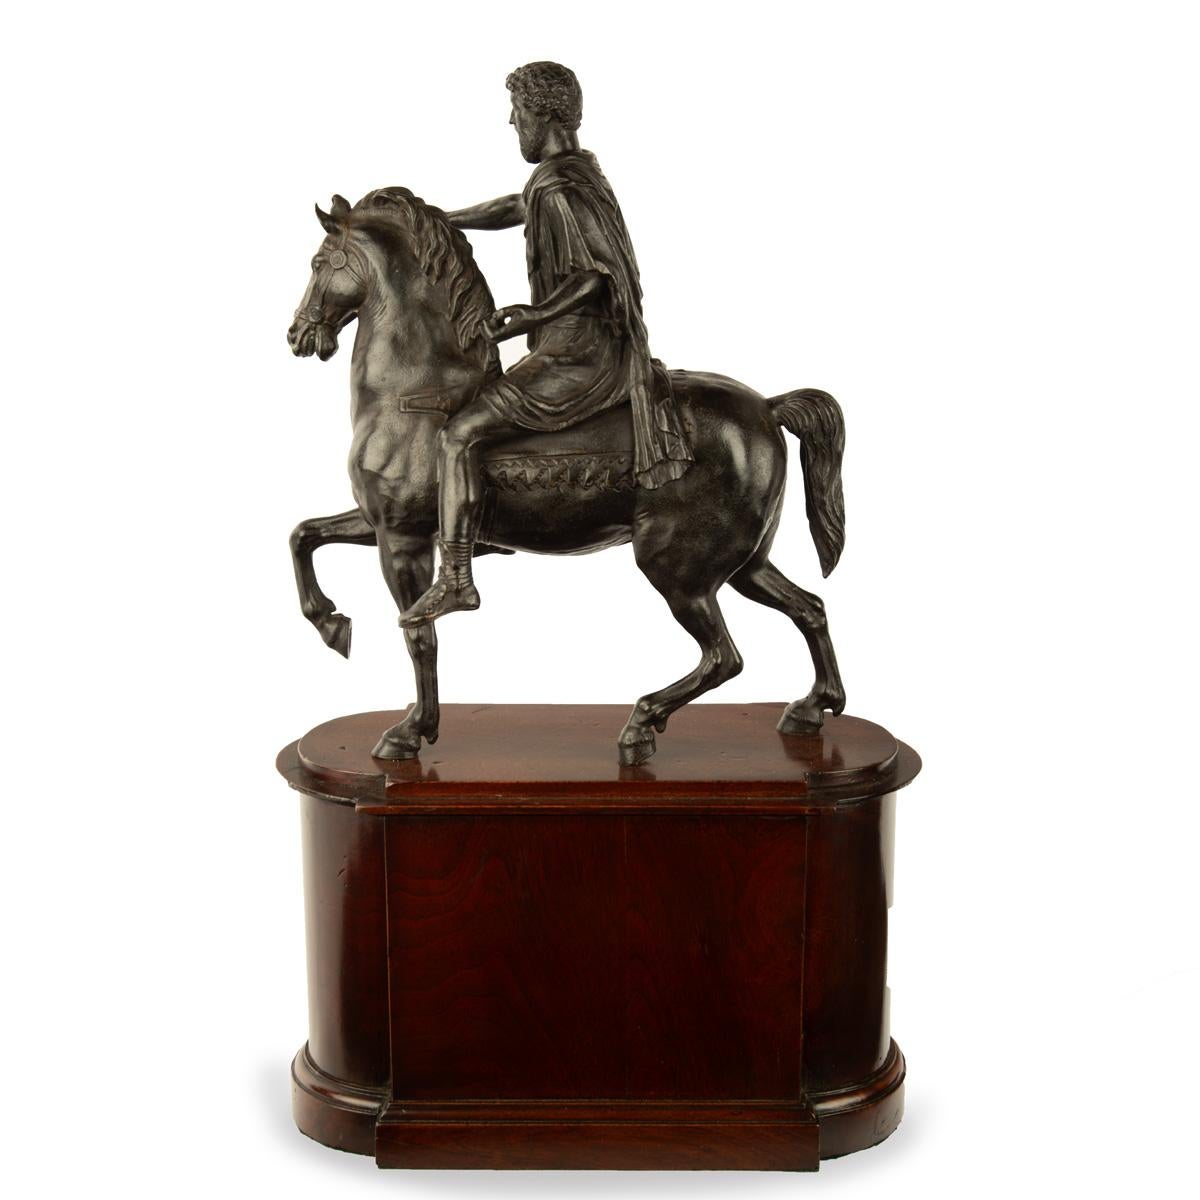 A Grand Tour equestrian bronze of Marcus Aurelius, after Hopfgarten 3